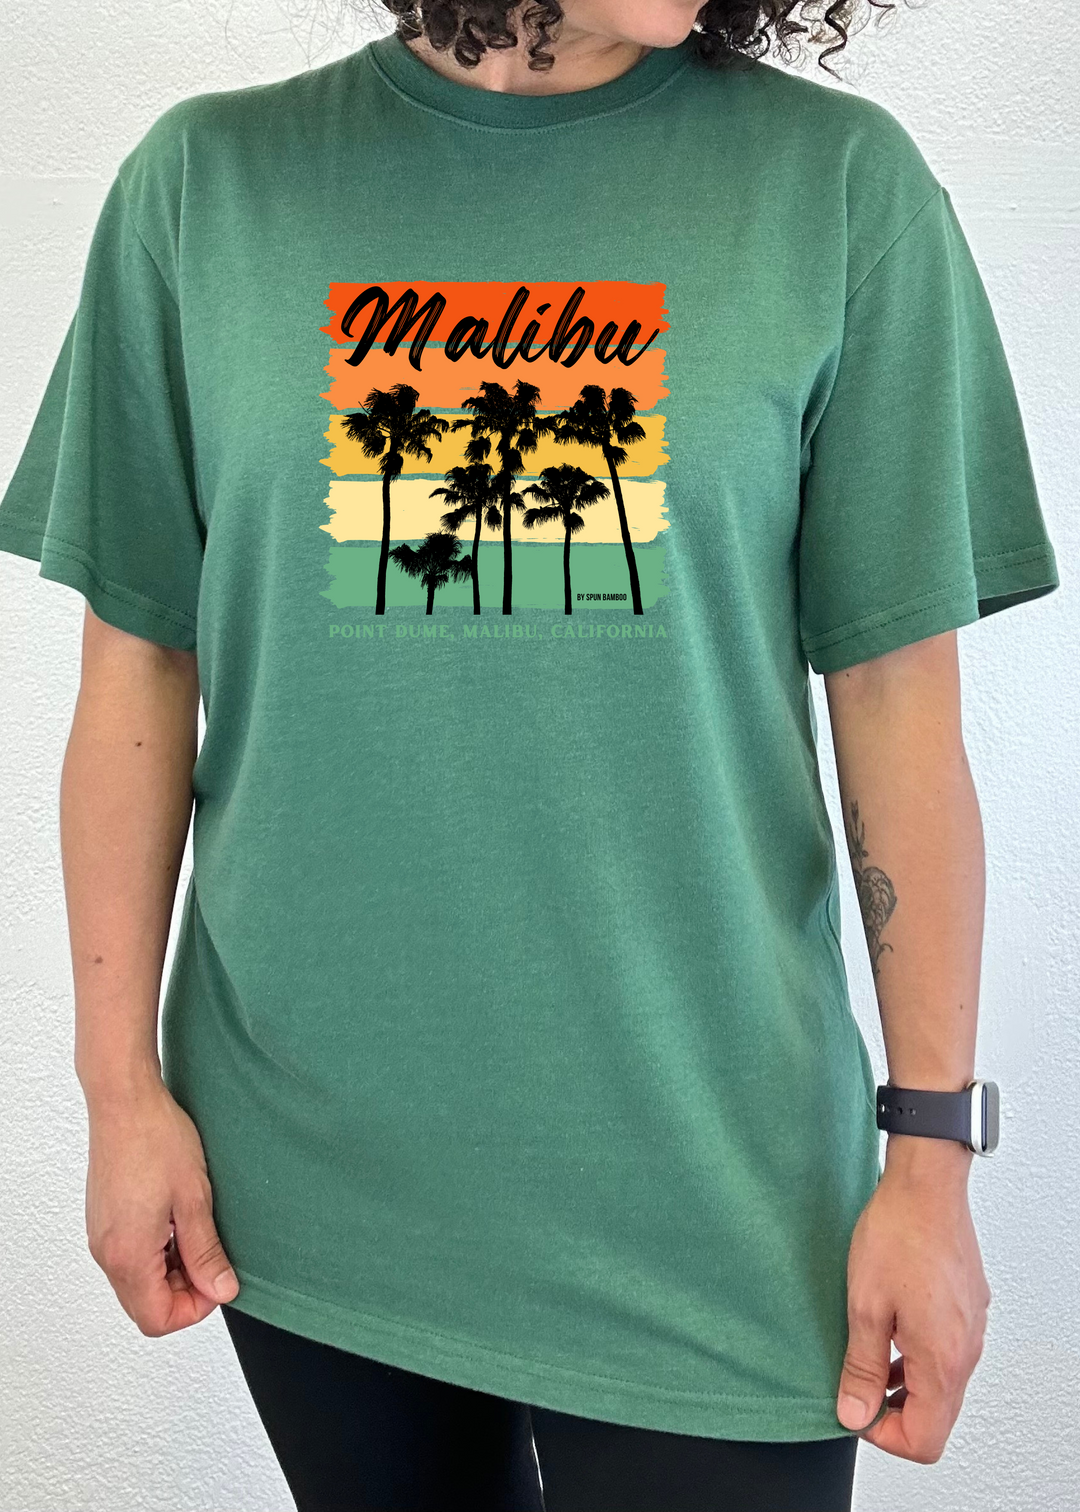 Malibu Unisex Graphic Bamboo T-Shirt teal